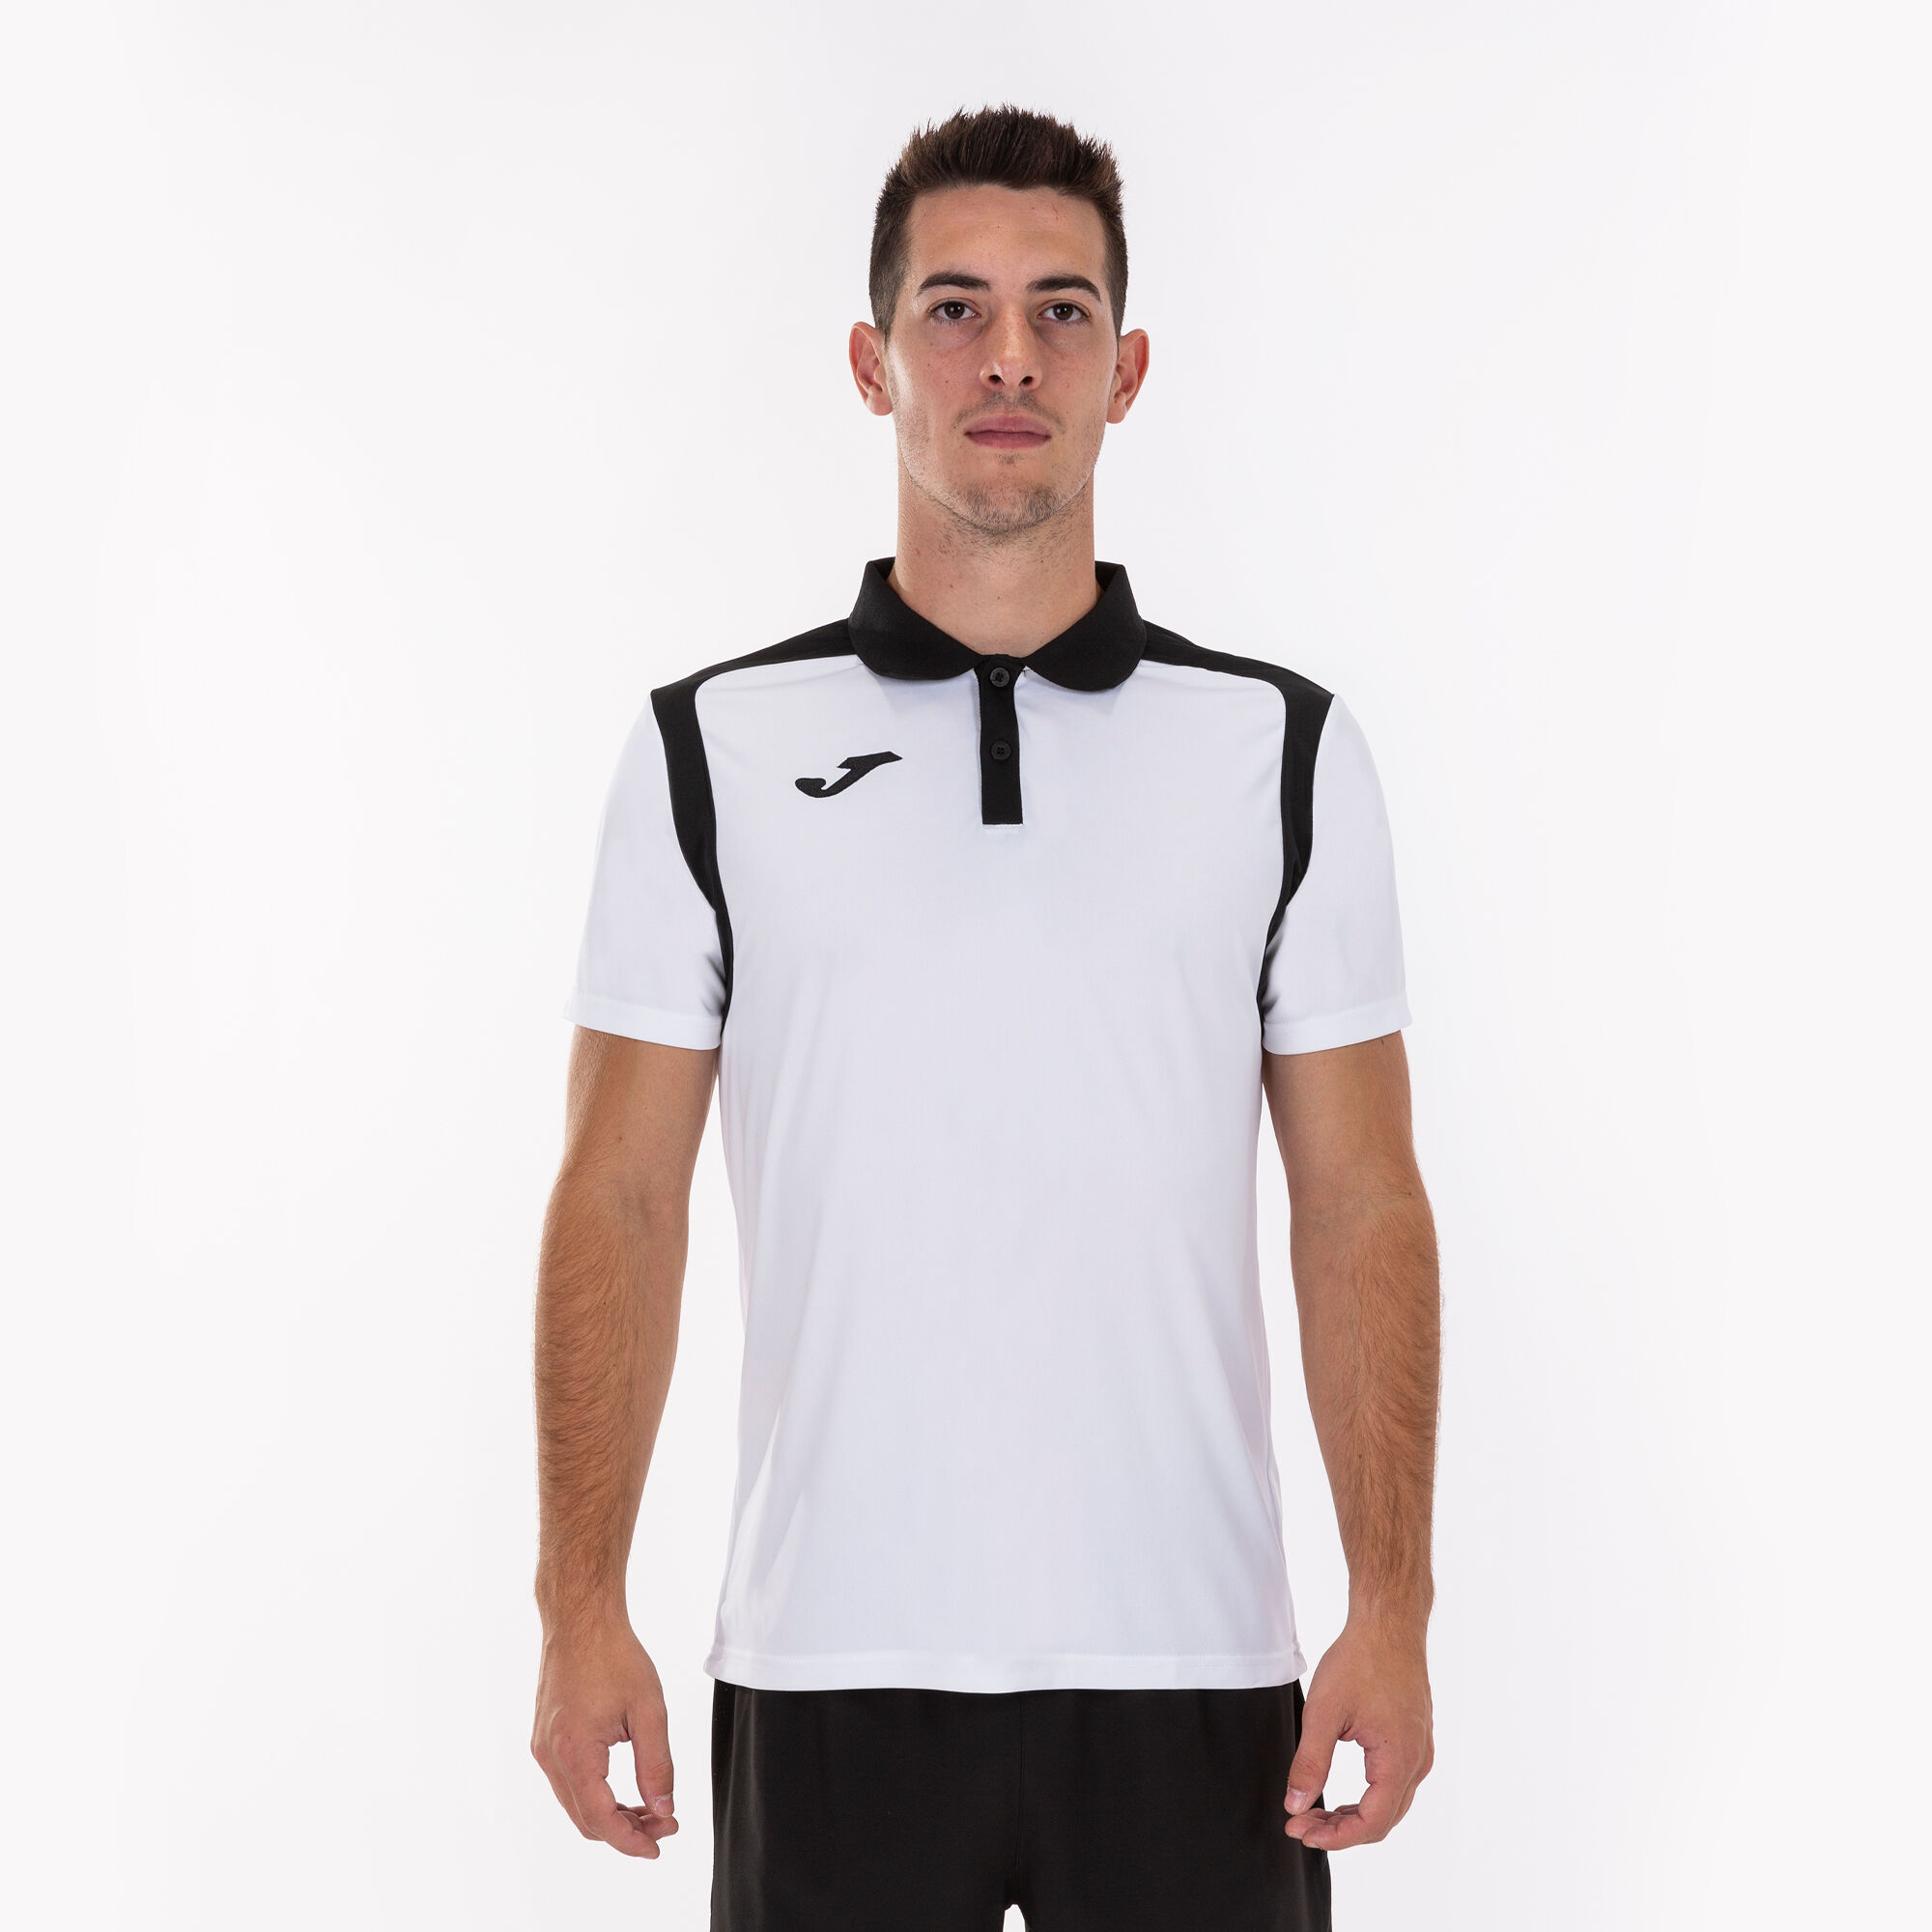 Polo shirt short-sleeve man Championship V white black